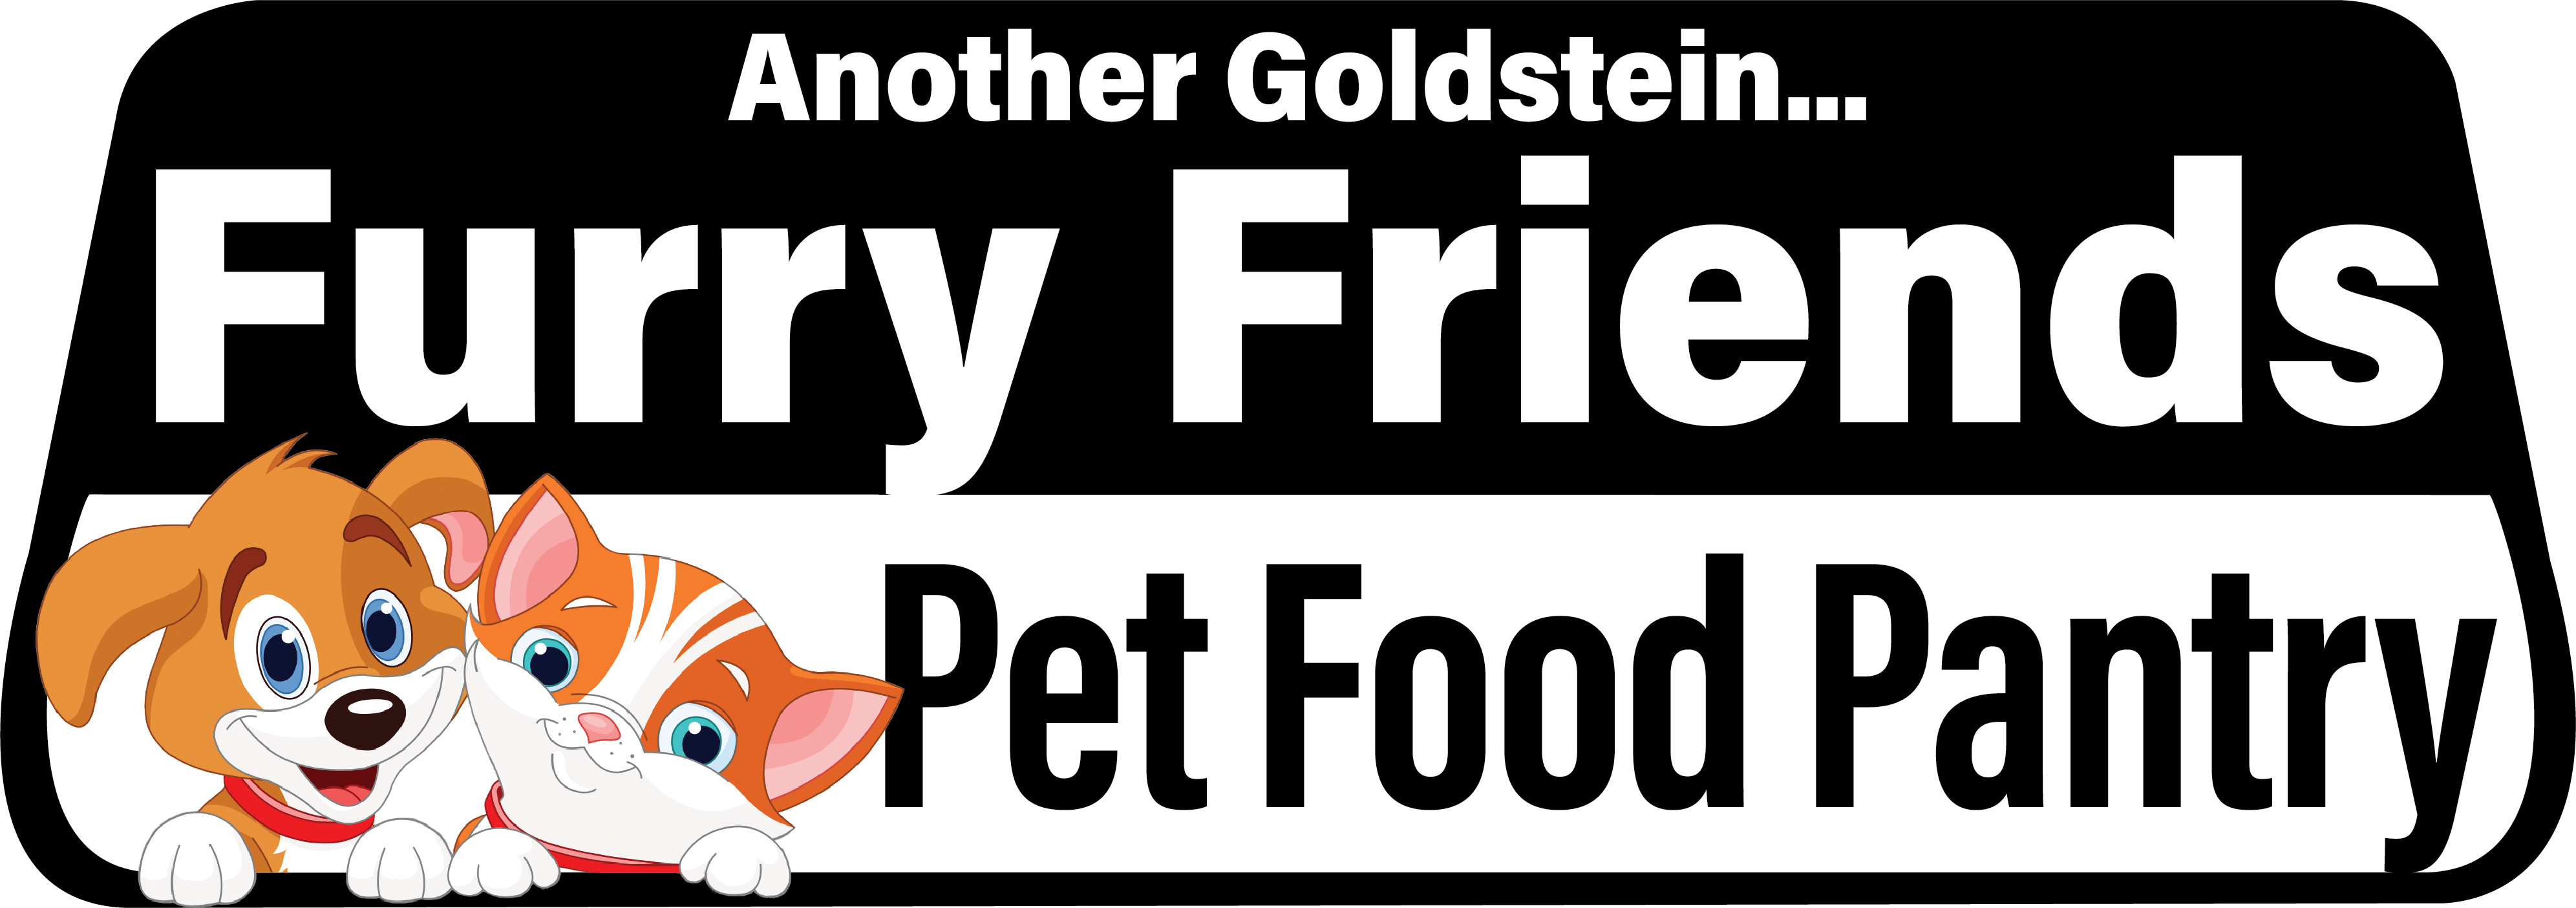 Goldstein Auto Group Pet Food Pantry logo